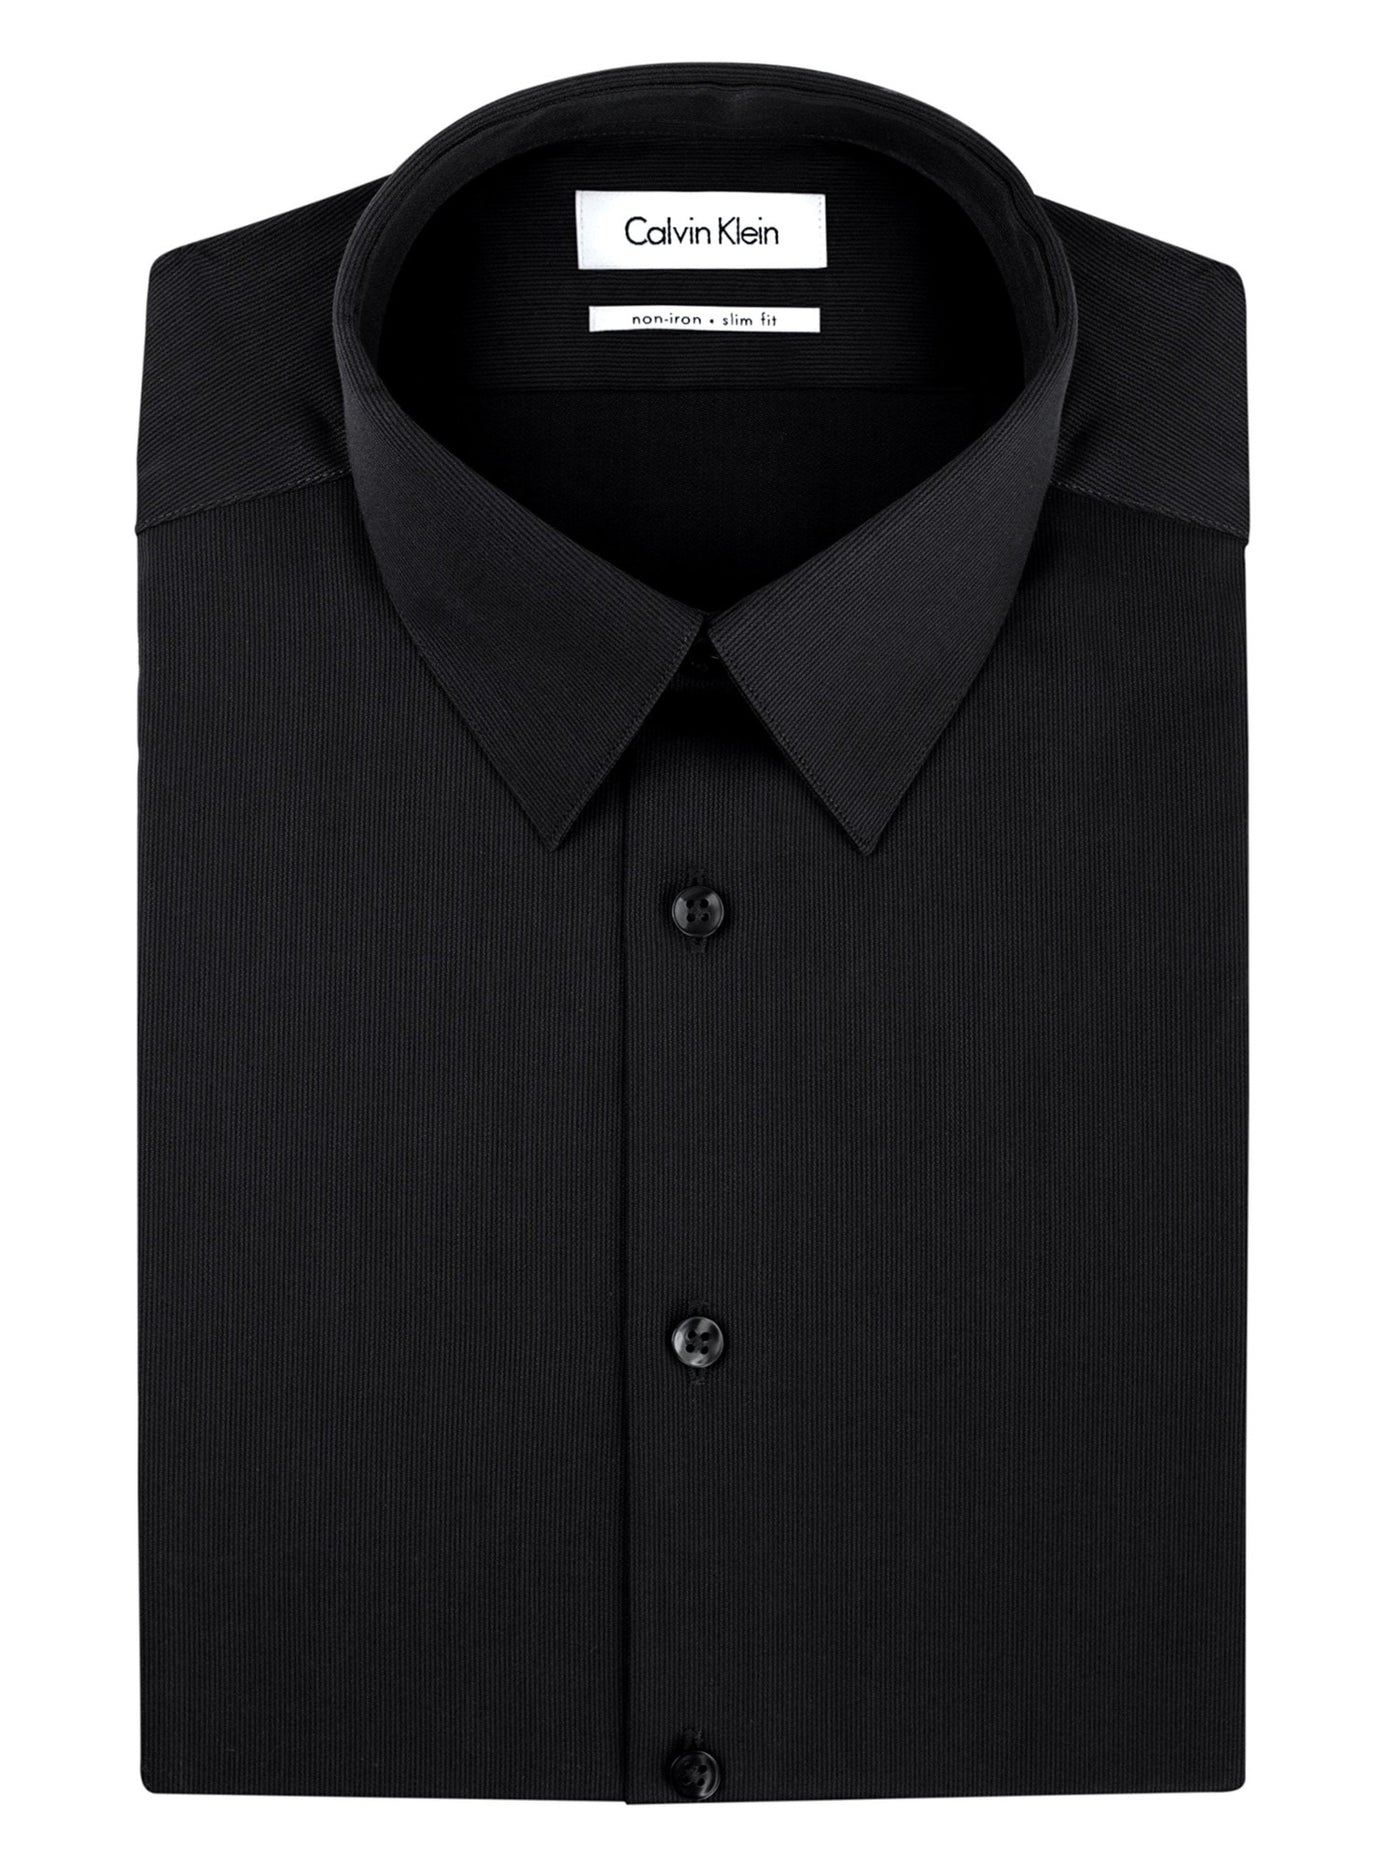 CALVIN KLEIN Mens Black Spread Collar Slim Fit Button Down Shirt 15- 32/33